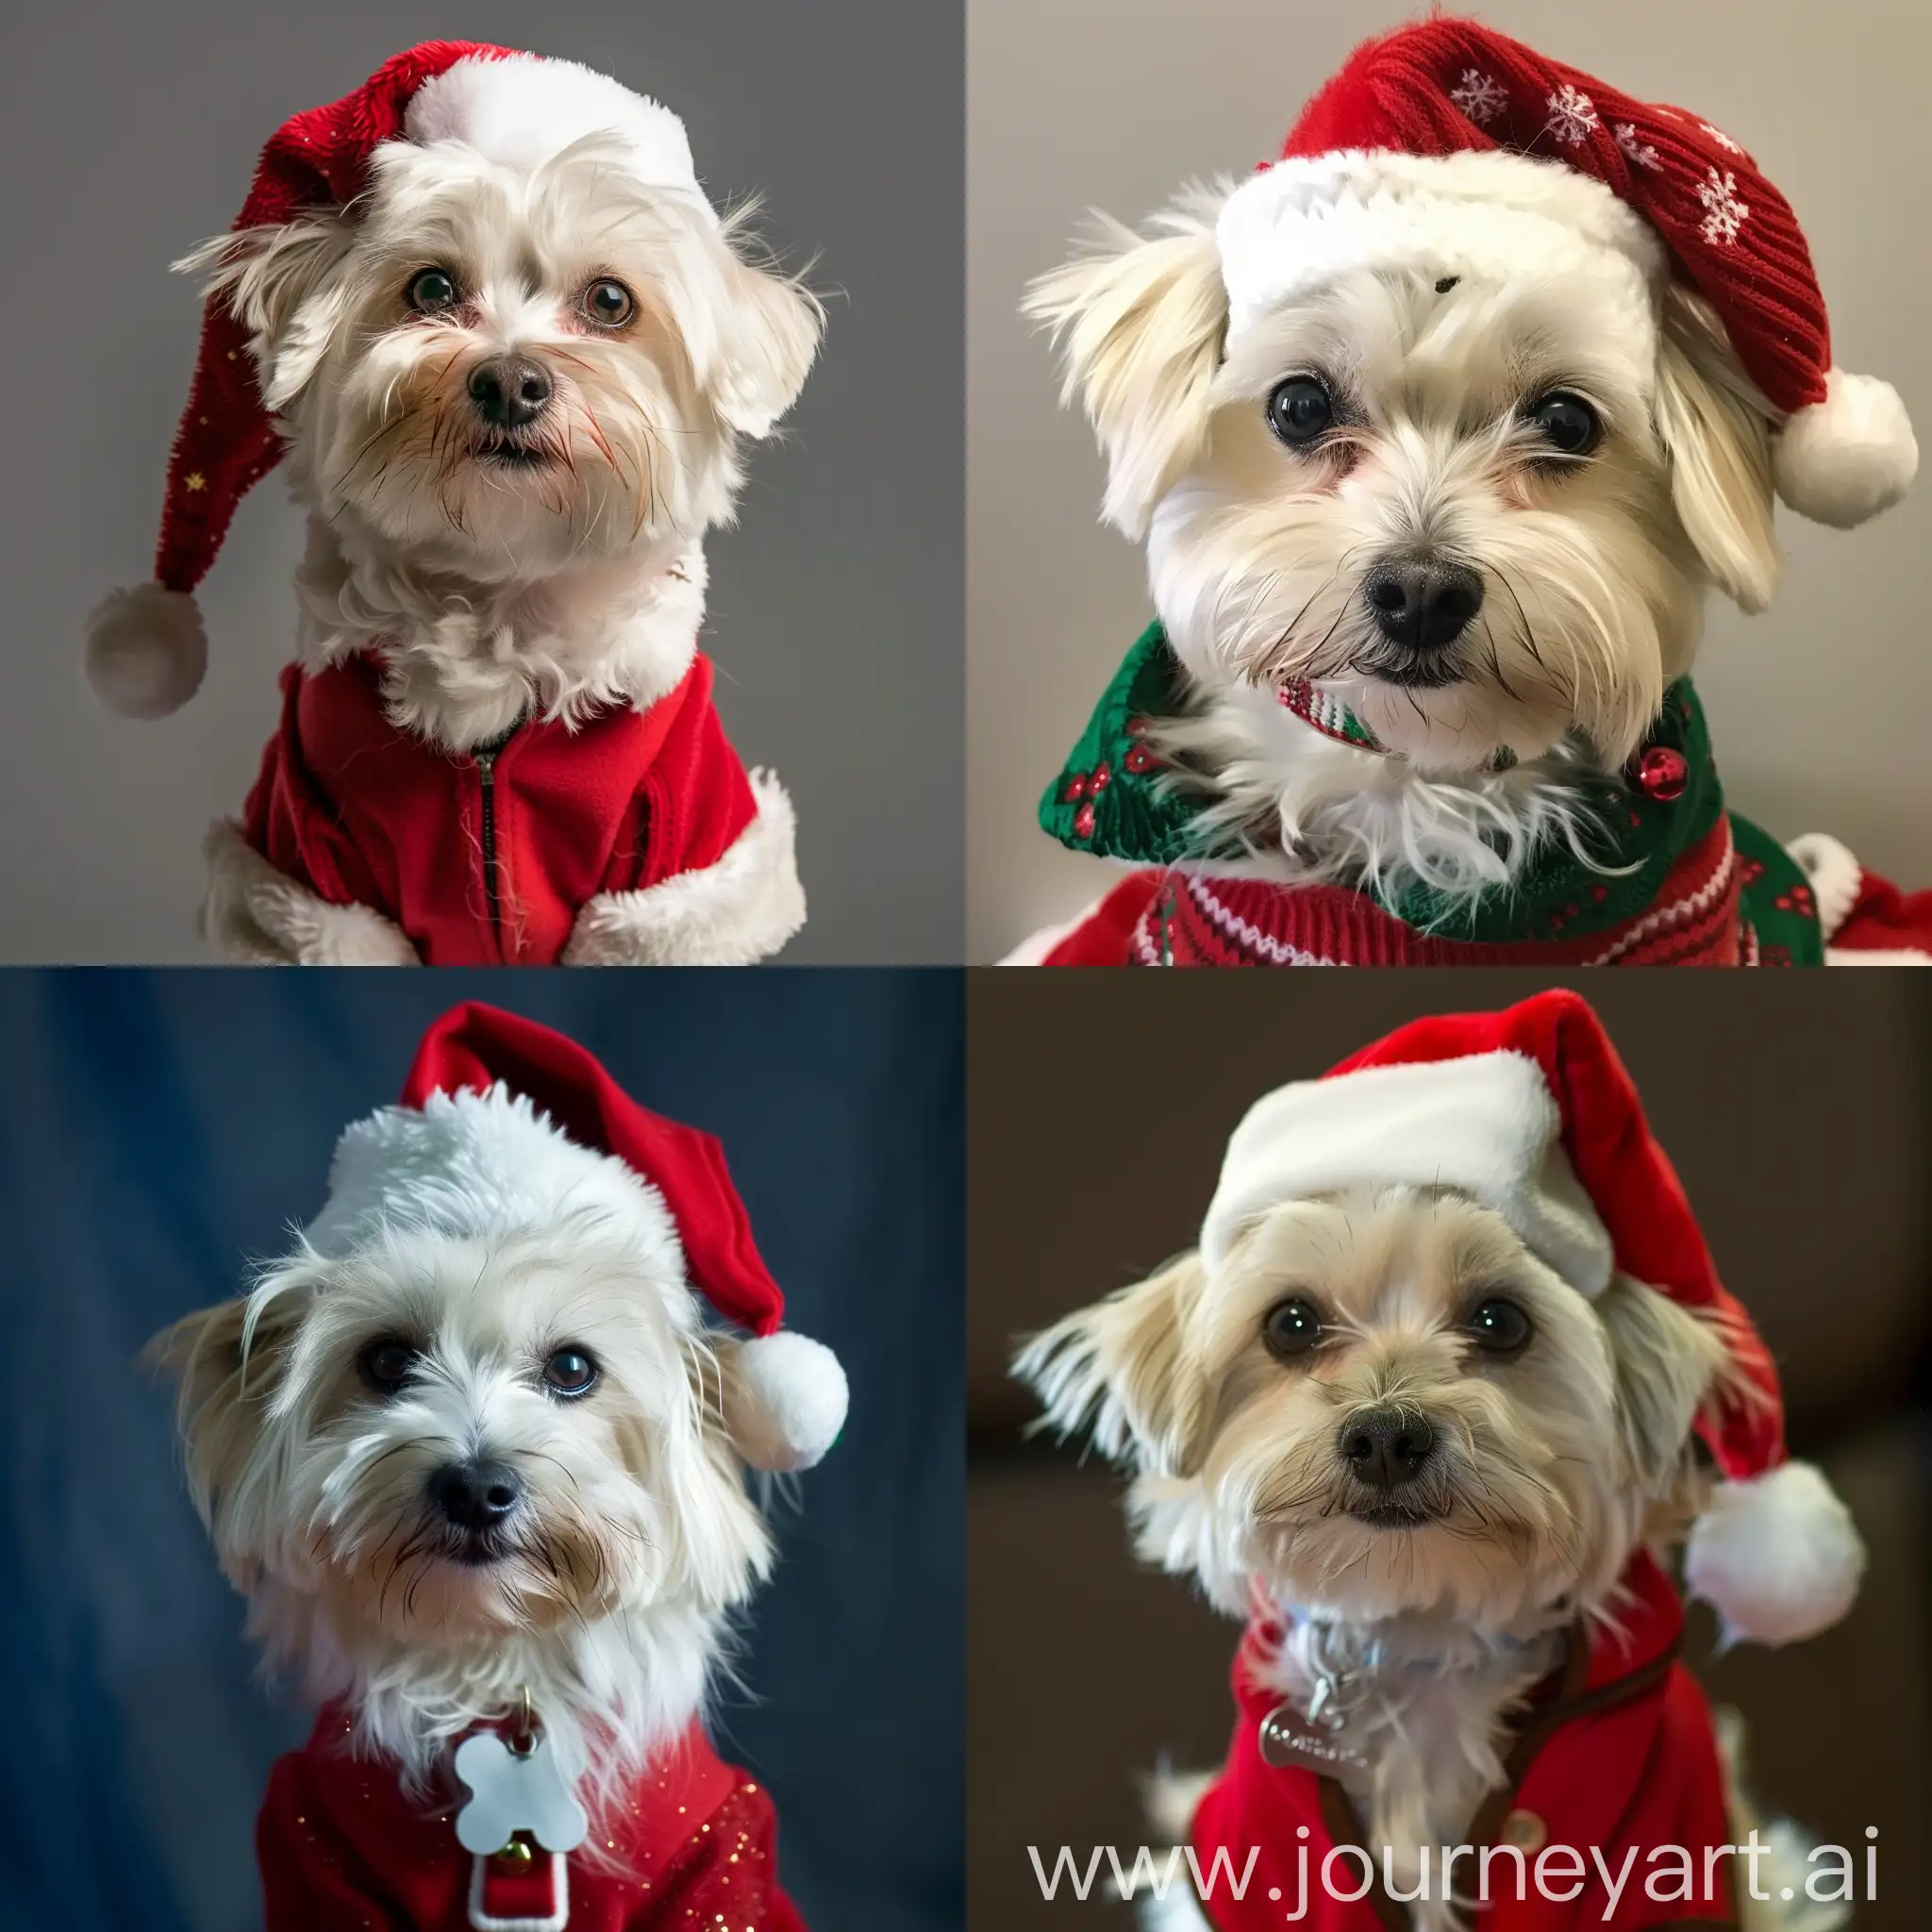 Adorable-Maltese-Dog-in-Festive-Christmas-Attire